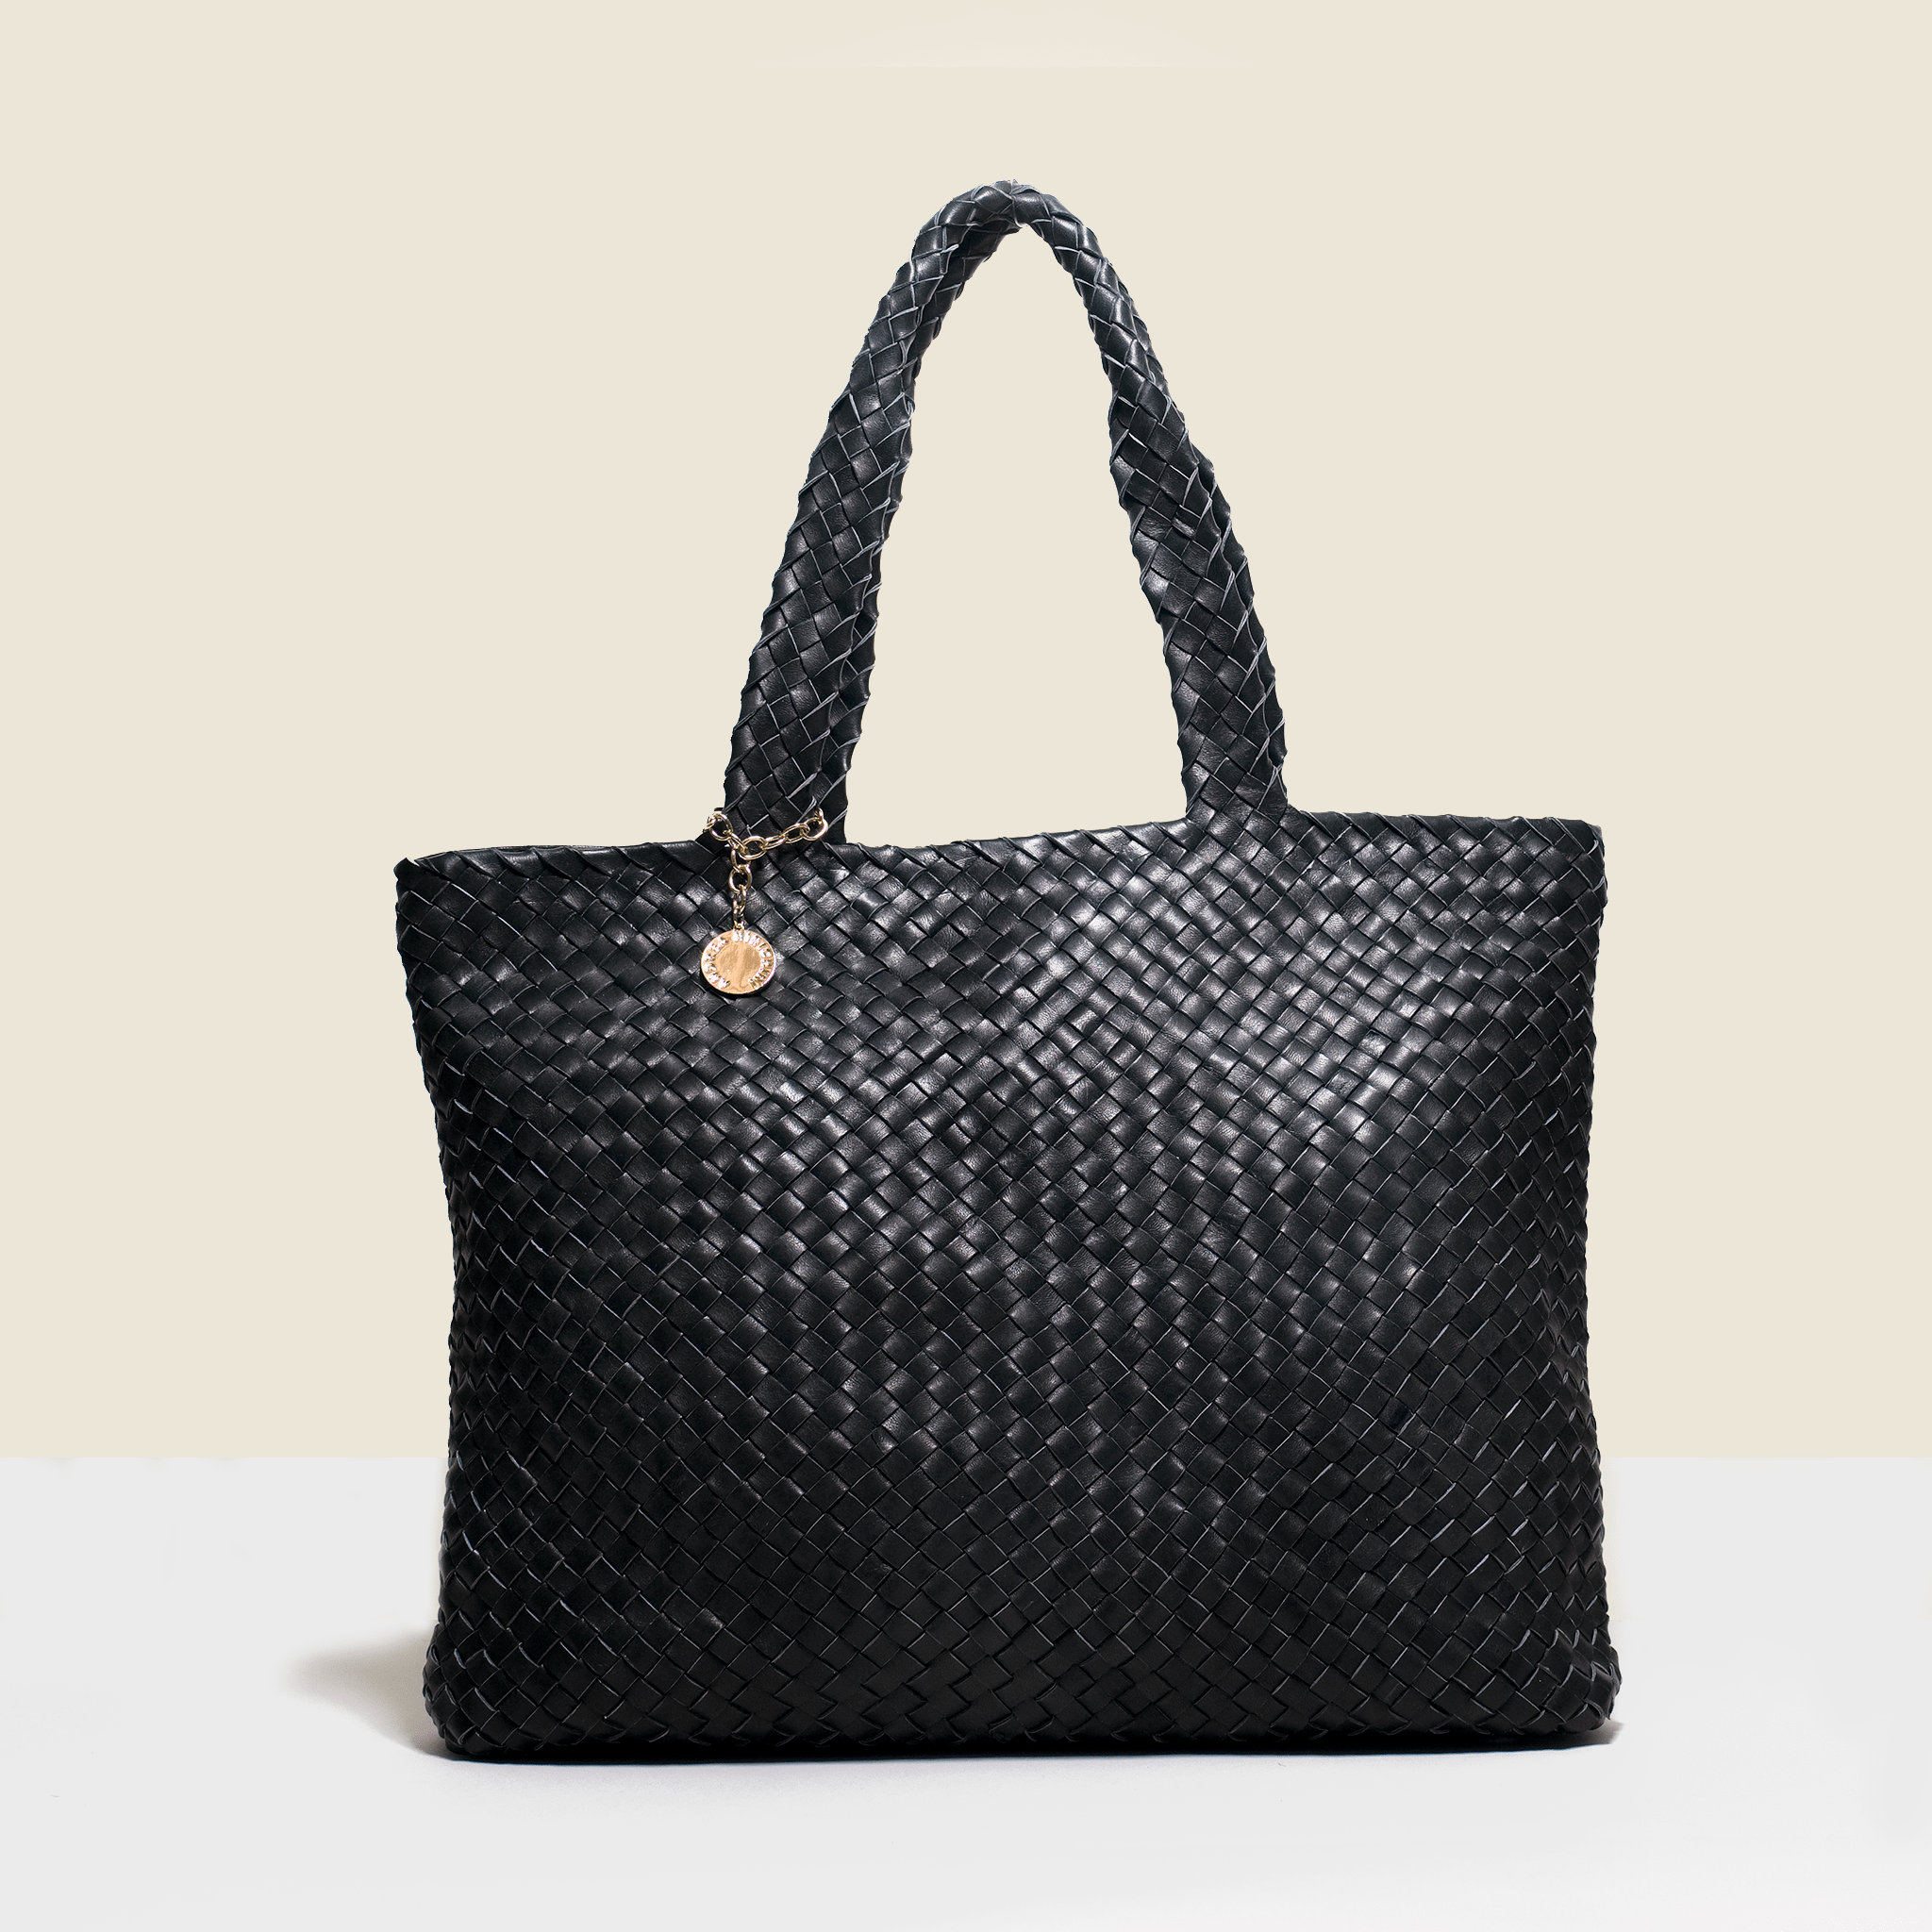 Shopper style black woven leather bag